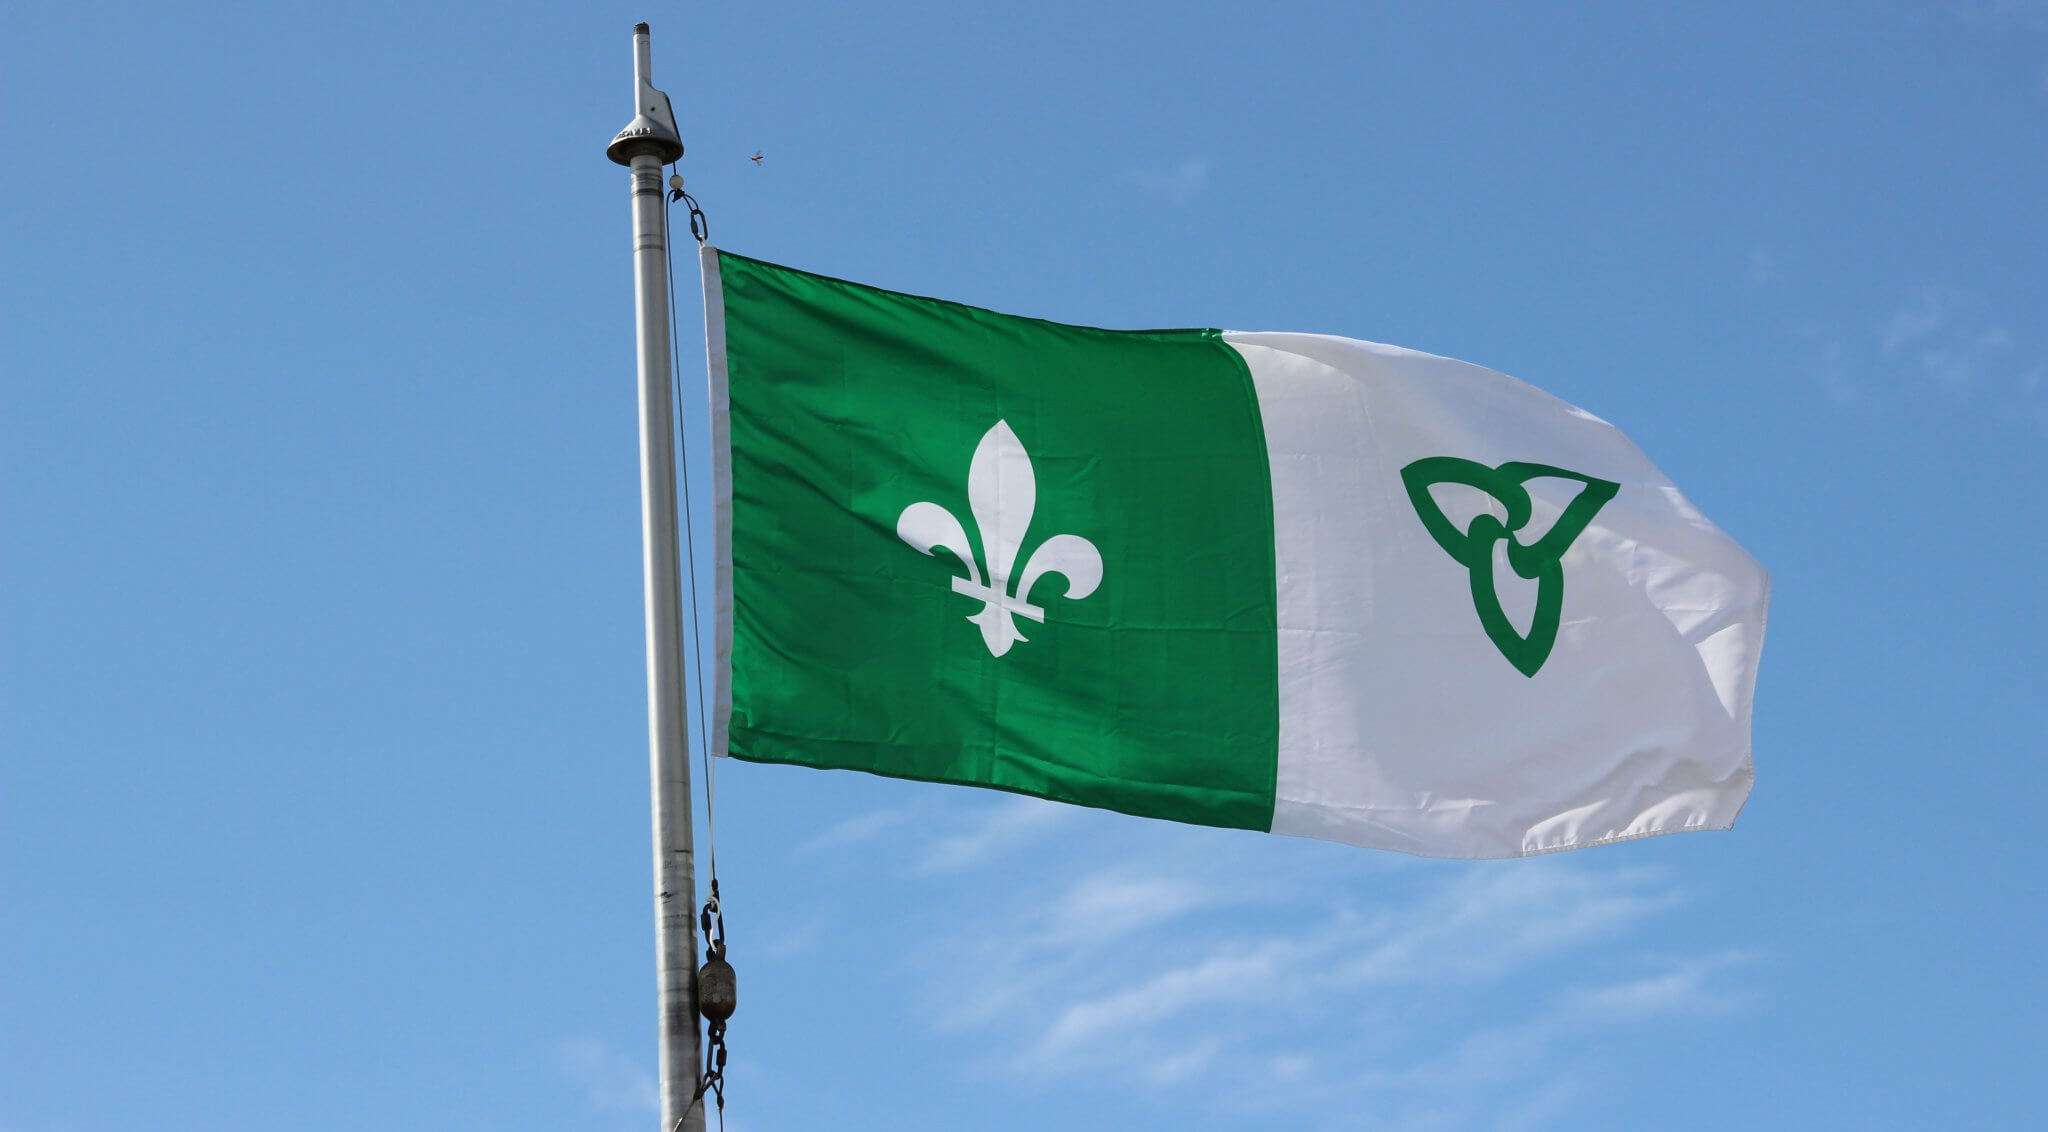 Le drapeau Franco-Ontarien